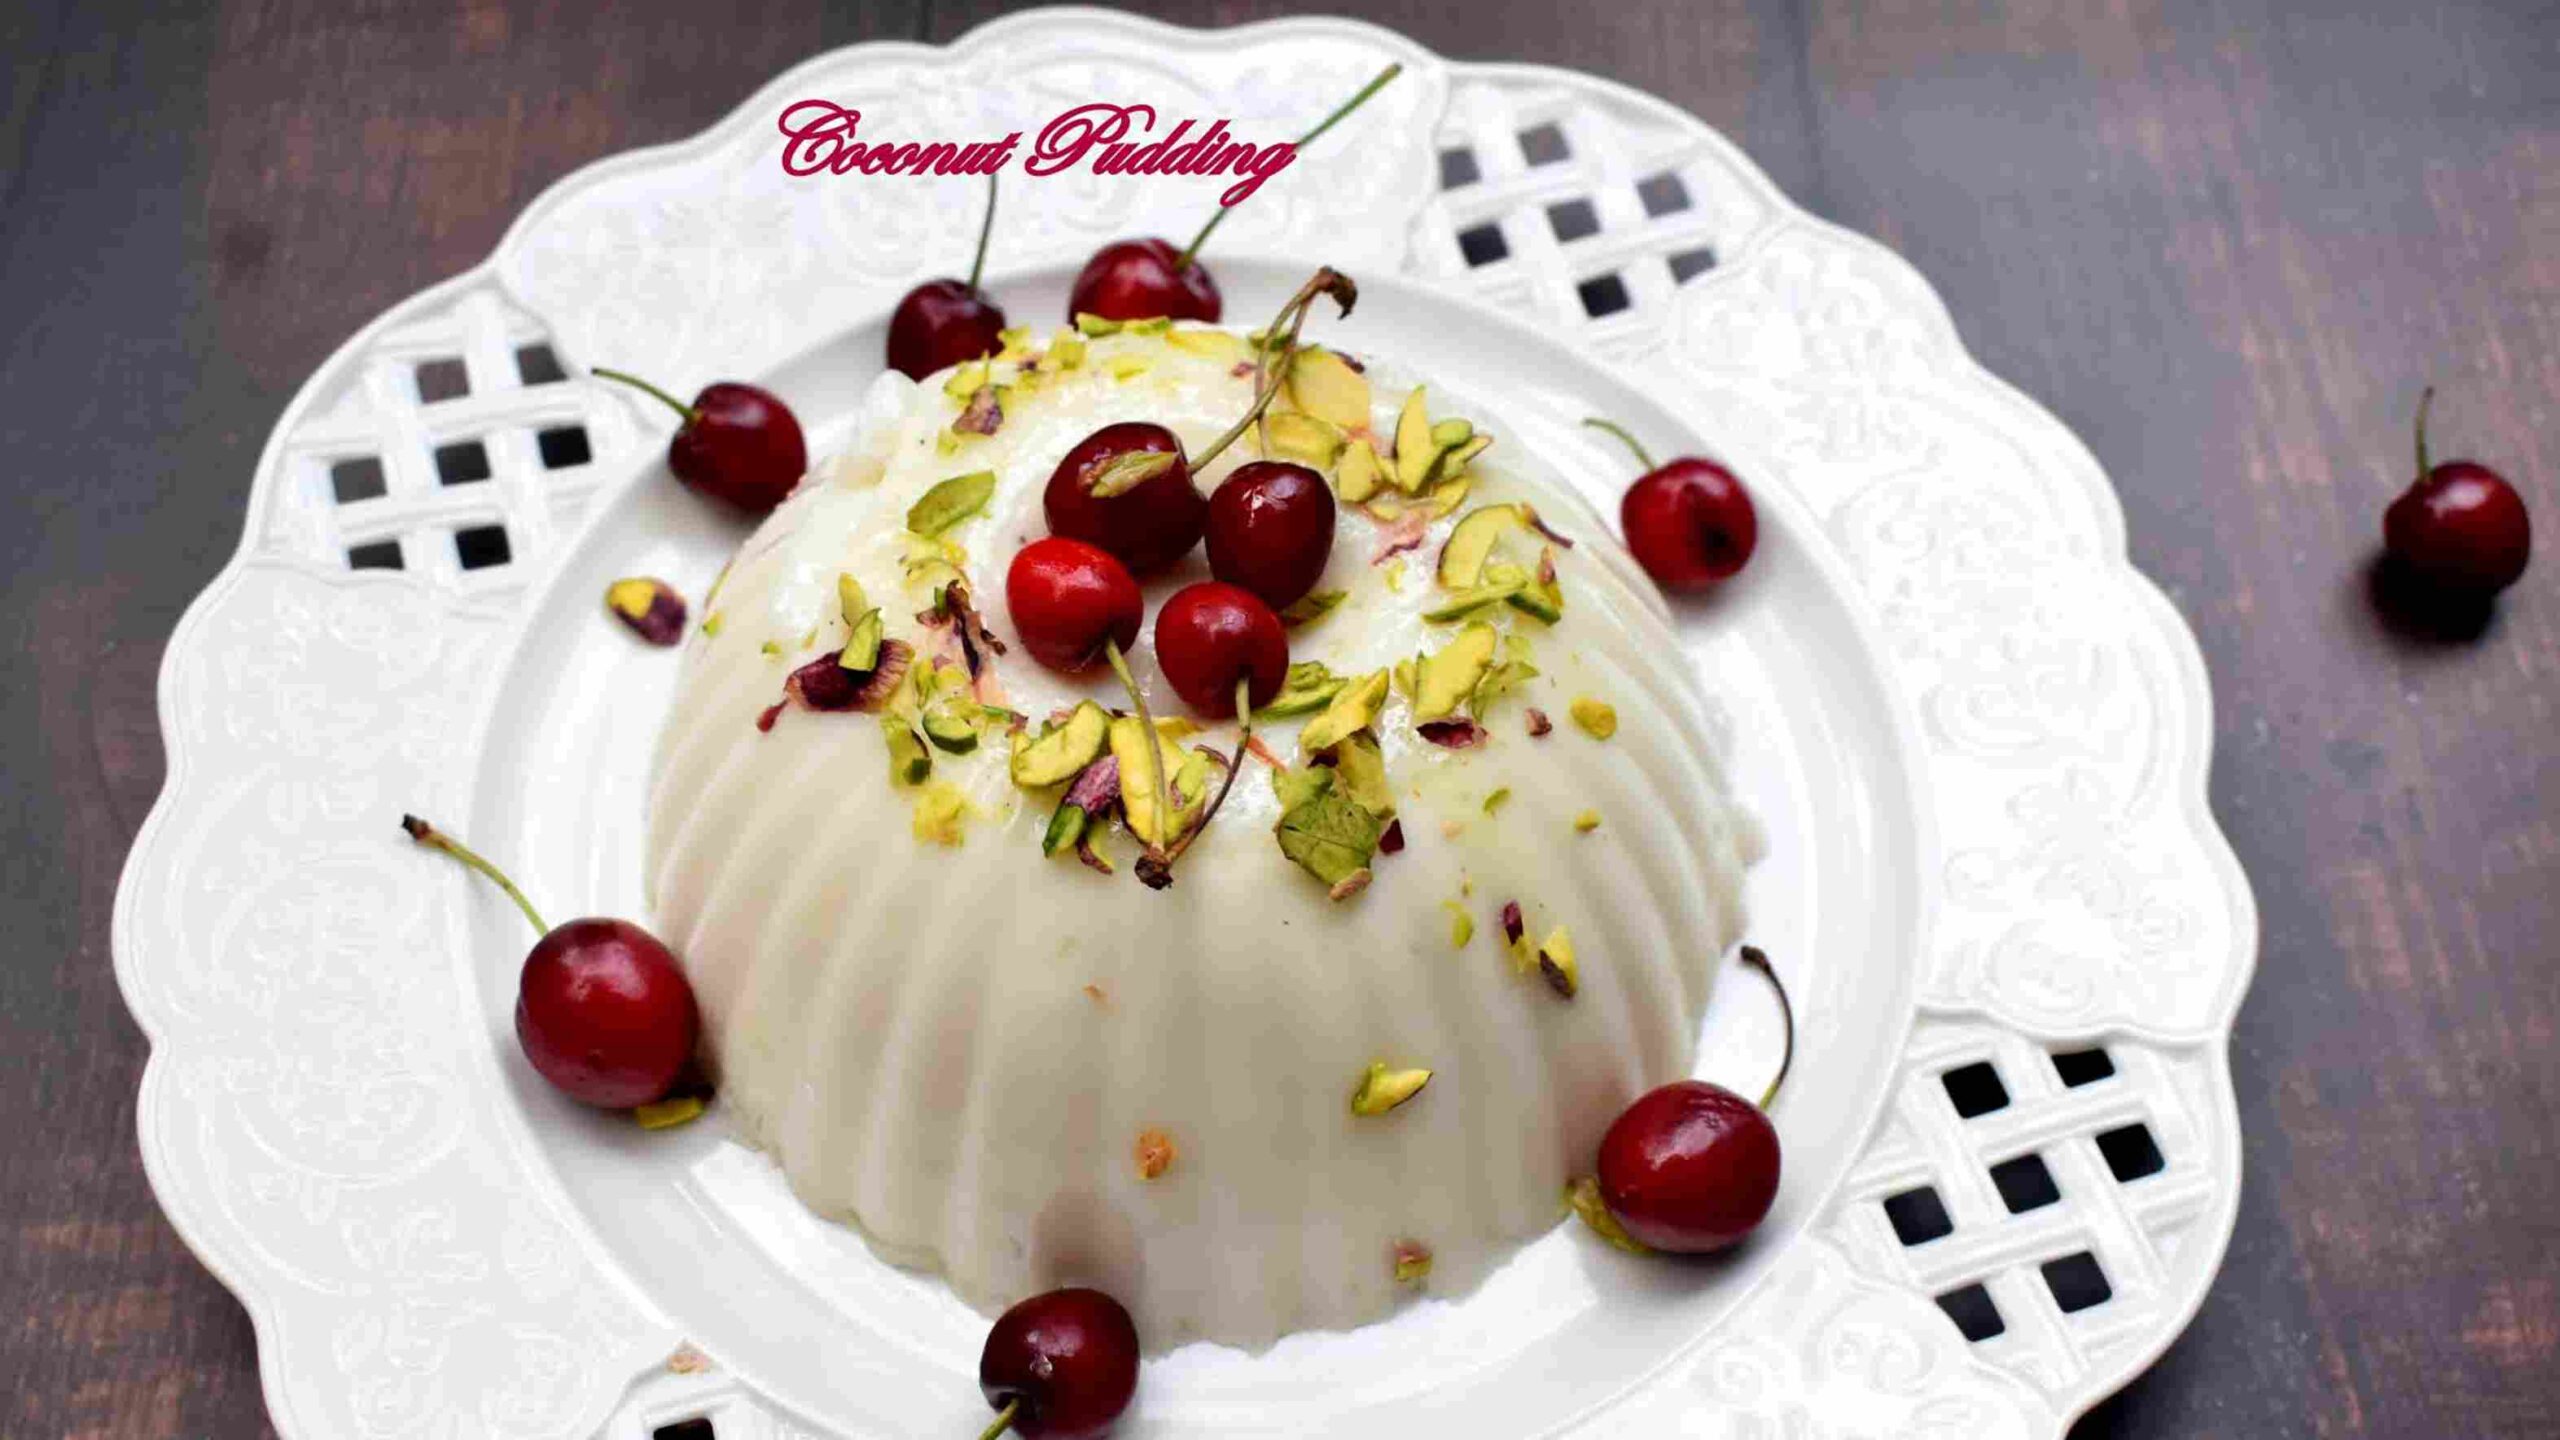 Tender Coconut Pudding - Ponnusamy Karthik